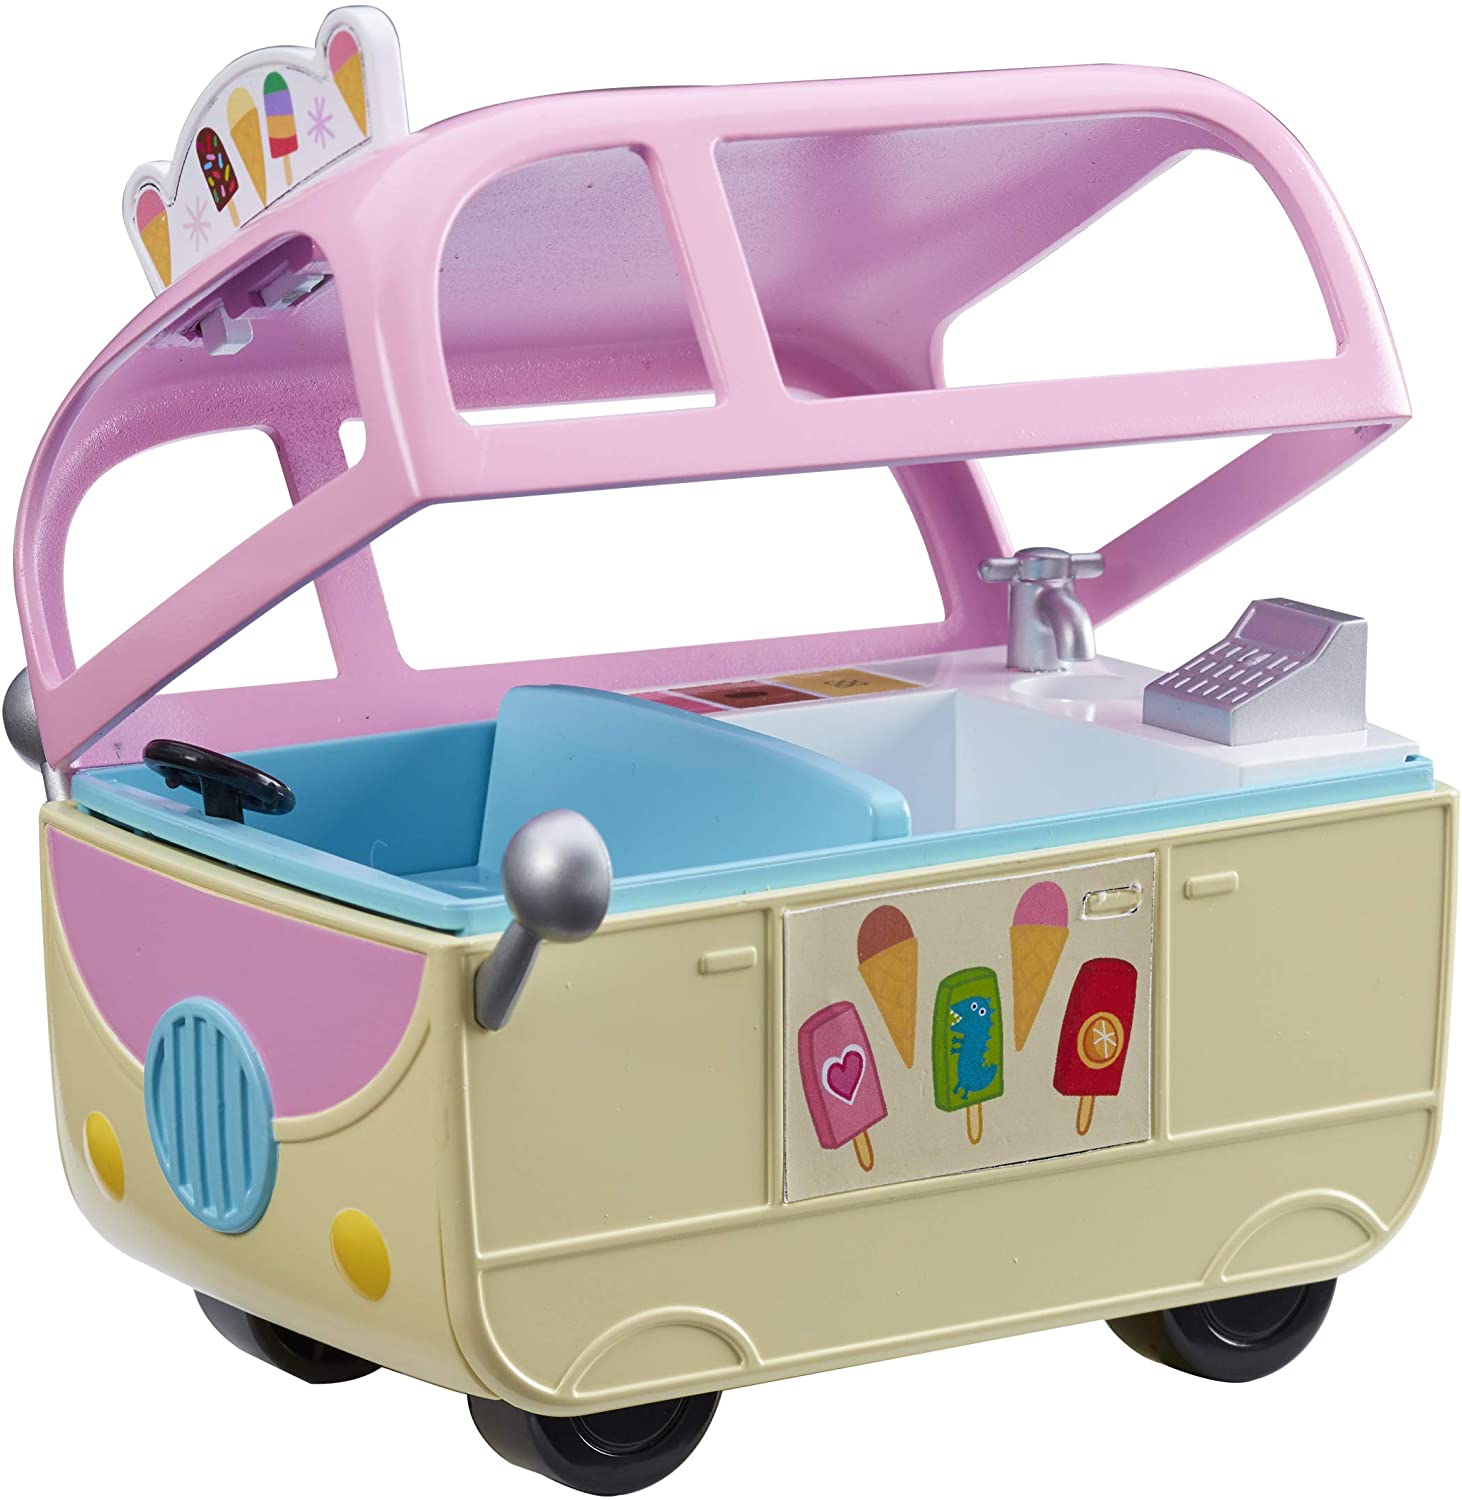 Peppa Pig - Ice Cream Van